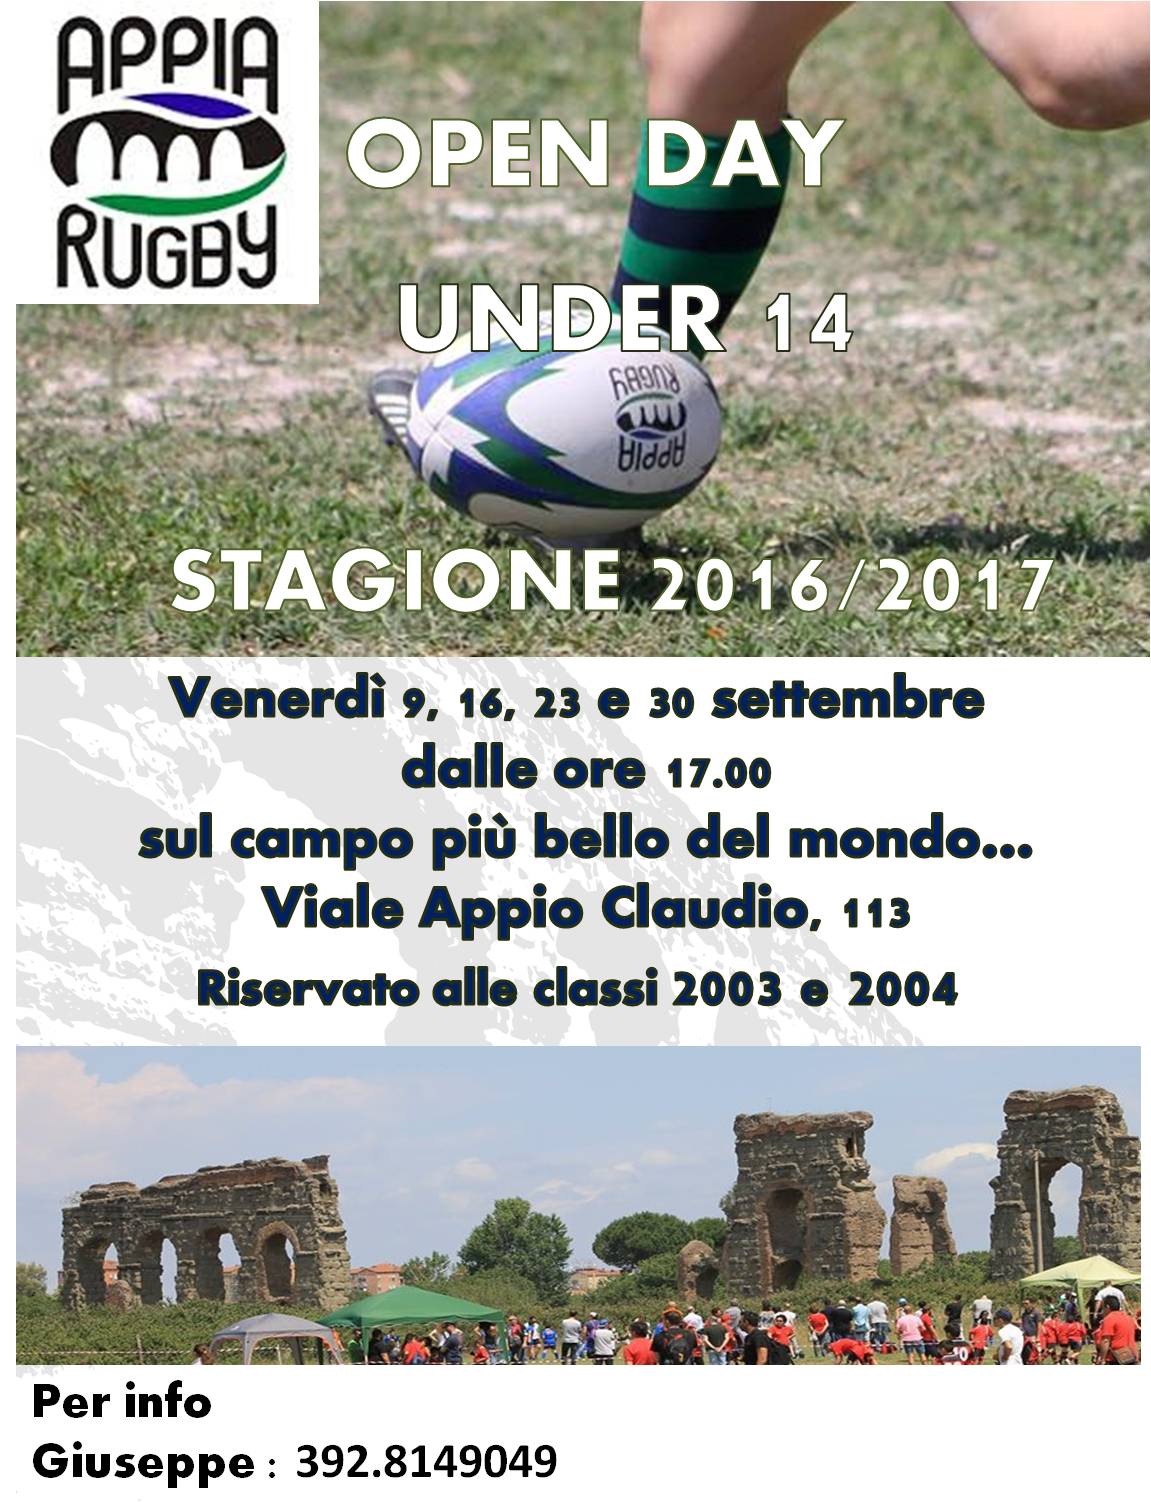 Stagione 2016/2017 – Open Day Under 14